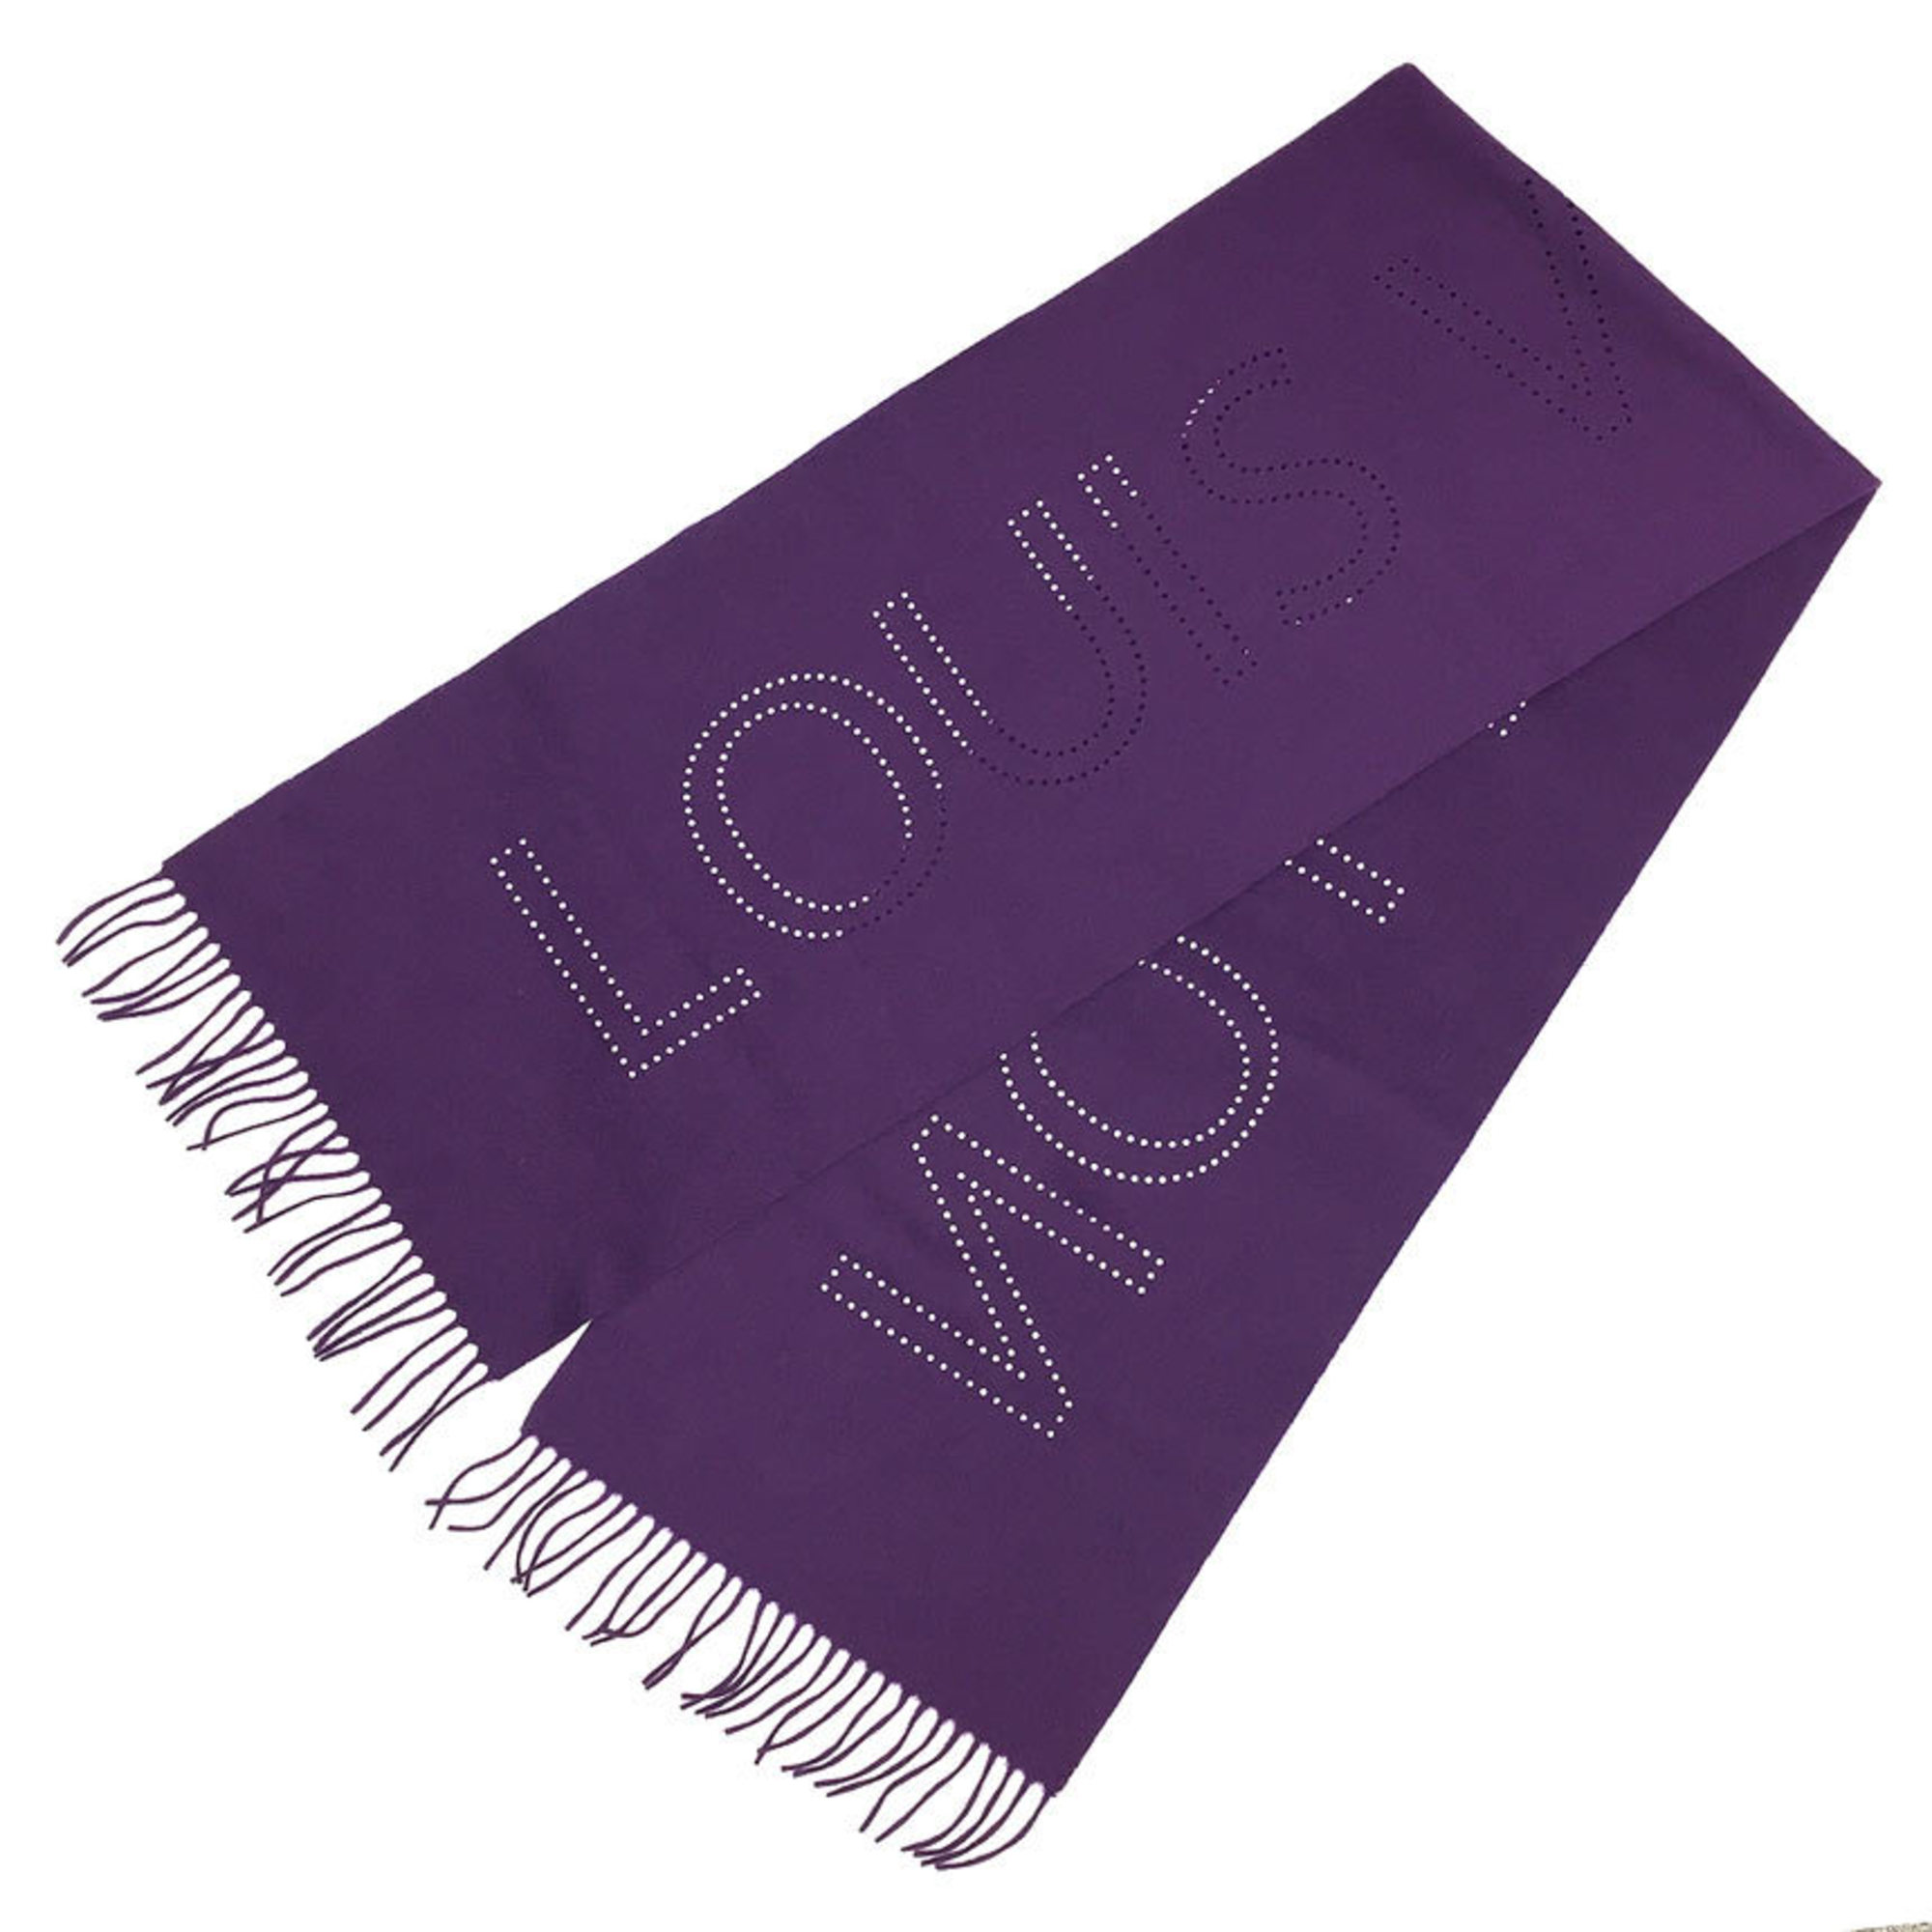 LOUIS VUITTON Louis Vuitton Escharpe LV Perfot Punching Muffler 401552 Dark Purple Cashmere Shawl aq9427